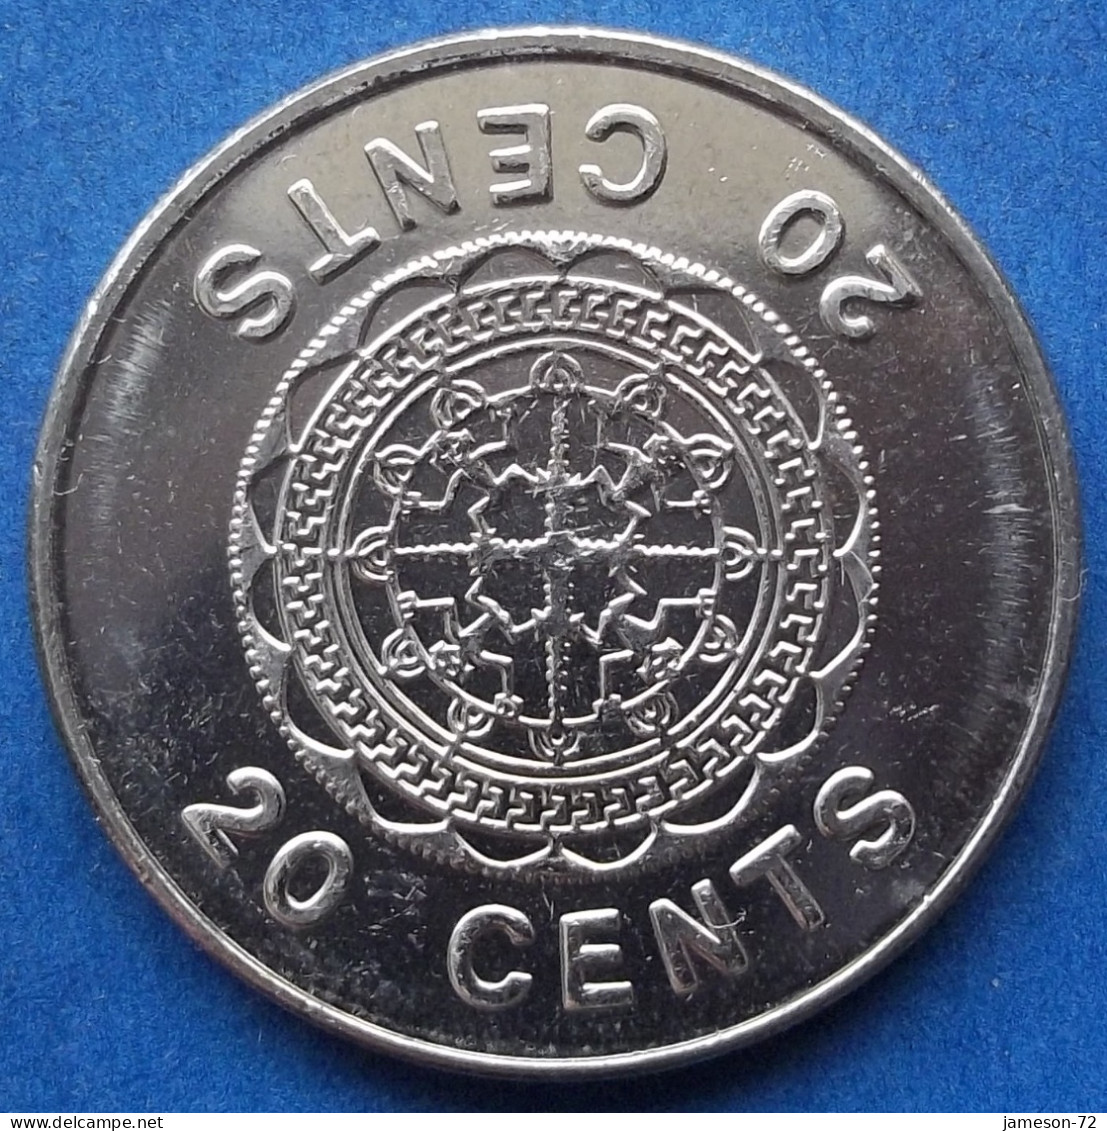 SOLOMON ISLANDS - 20 Censt 2005 "Malaita Pendant" KM# 28 Commonwealth Nation, Elizabeth II - Edelweiss Coins - Solomoneilanden